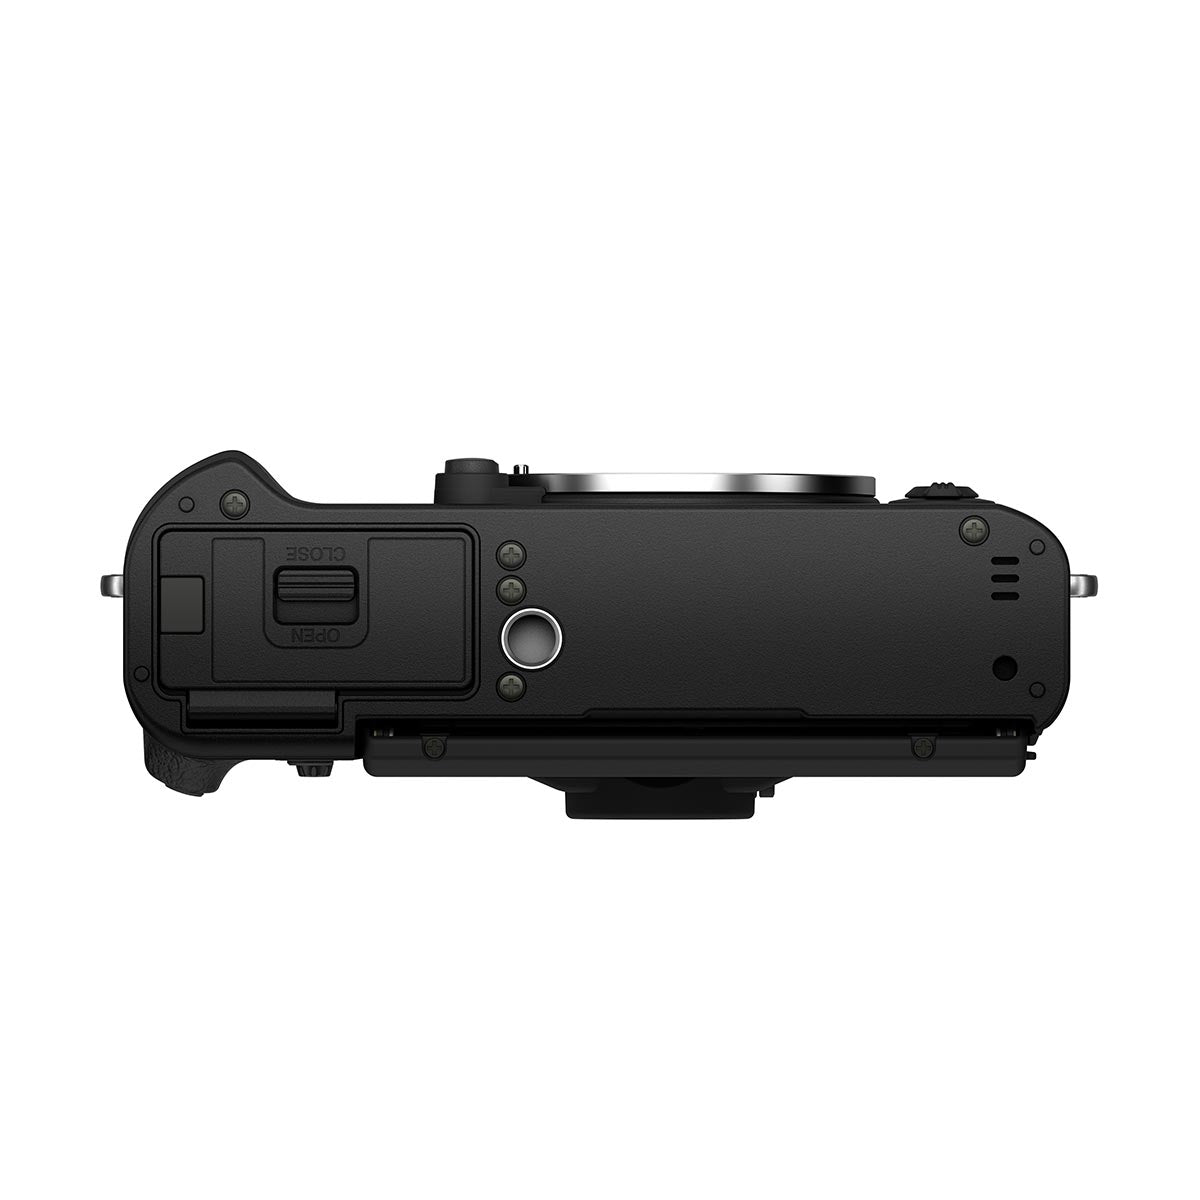 Fujifilm X-T30 II Body (Black)